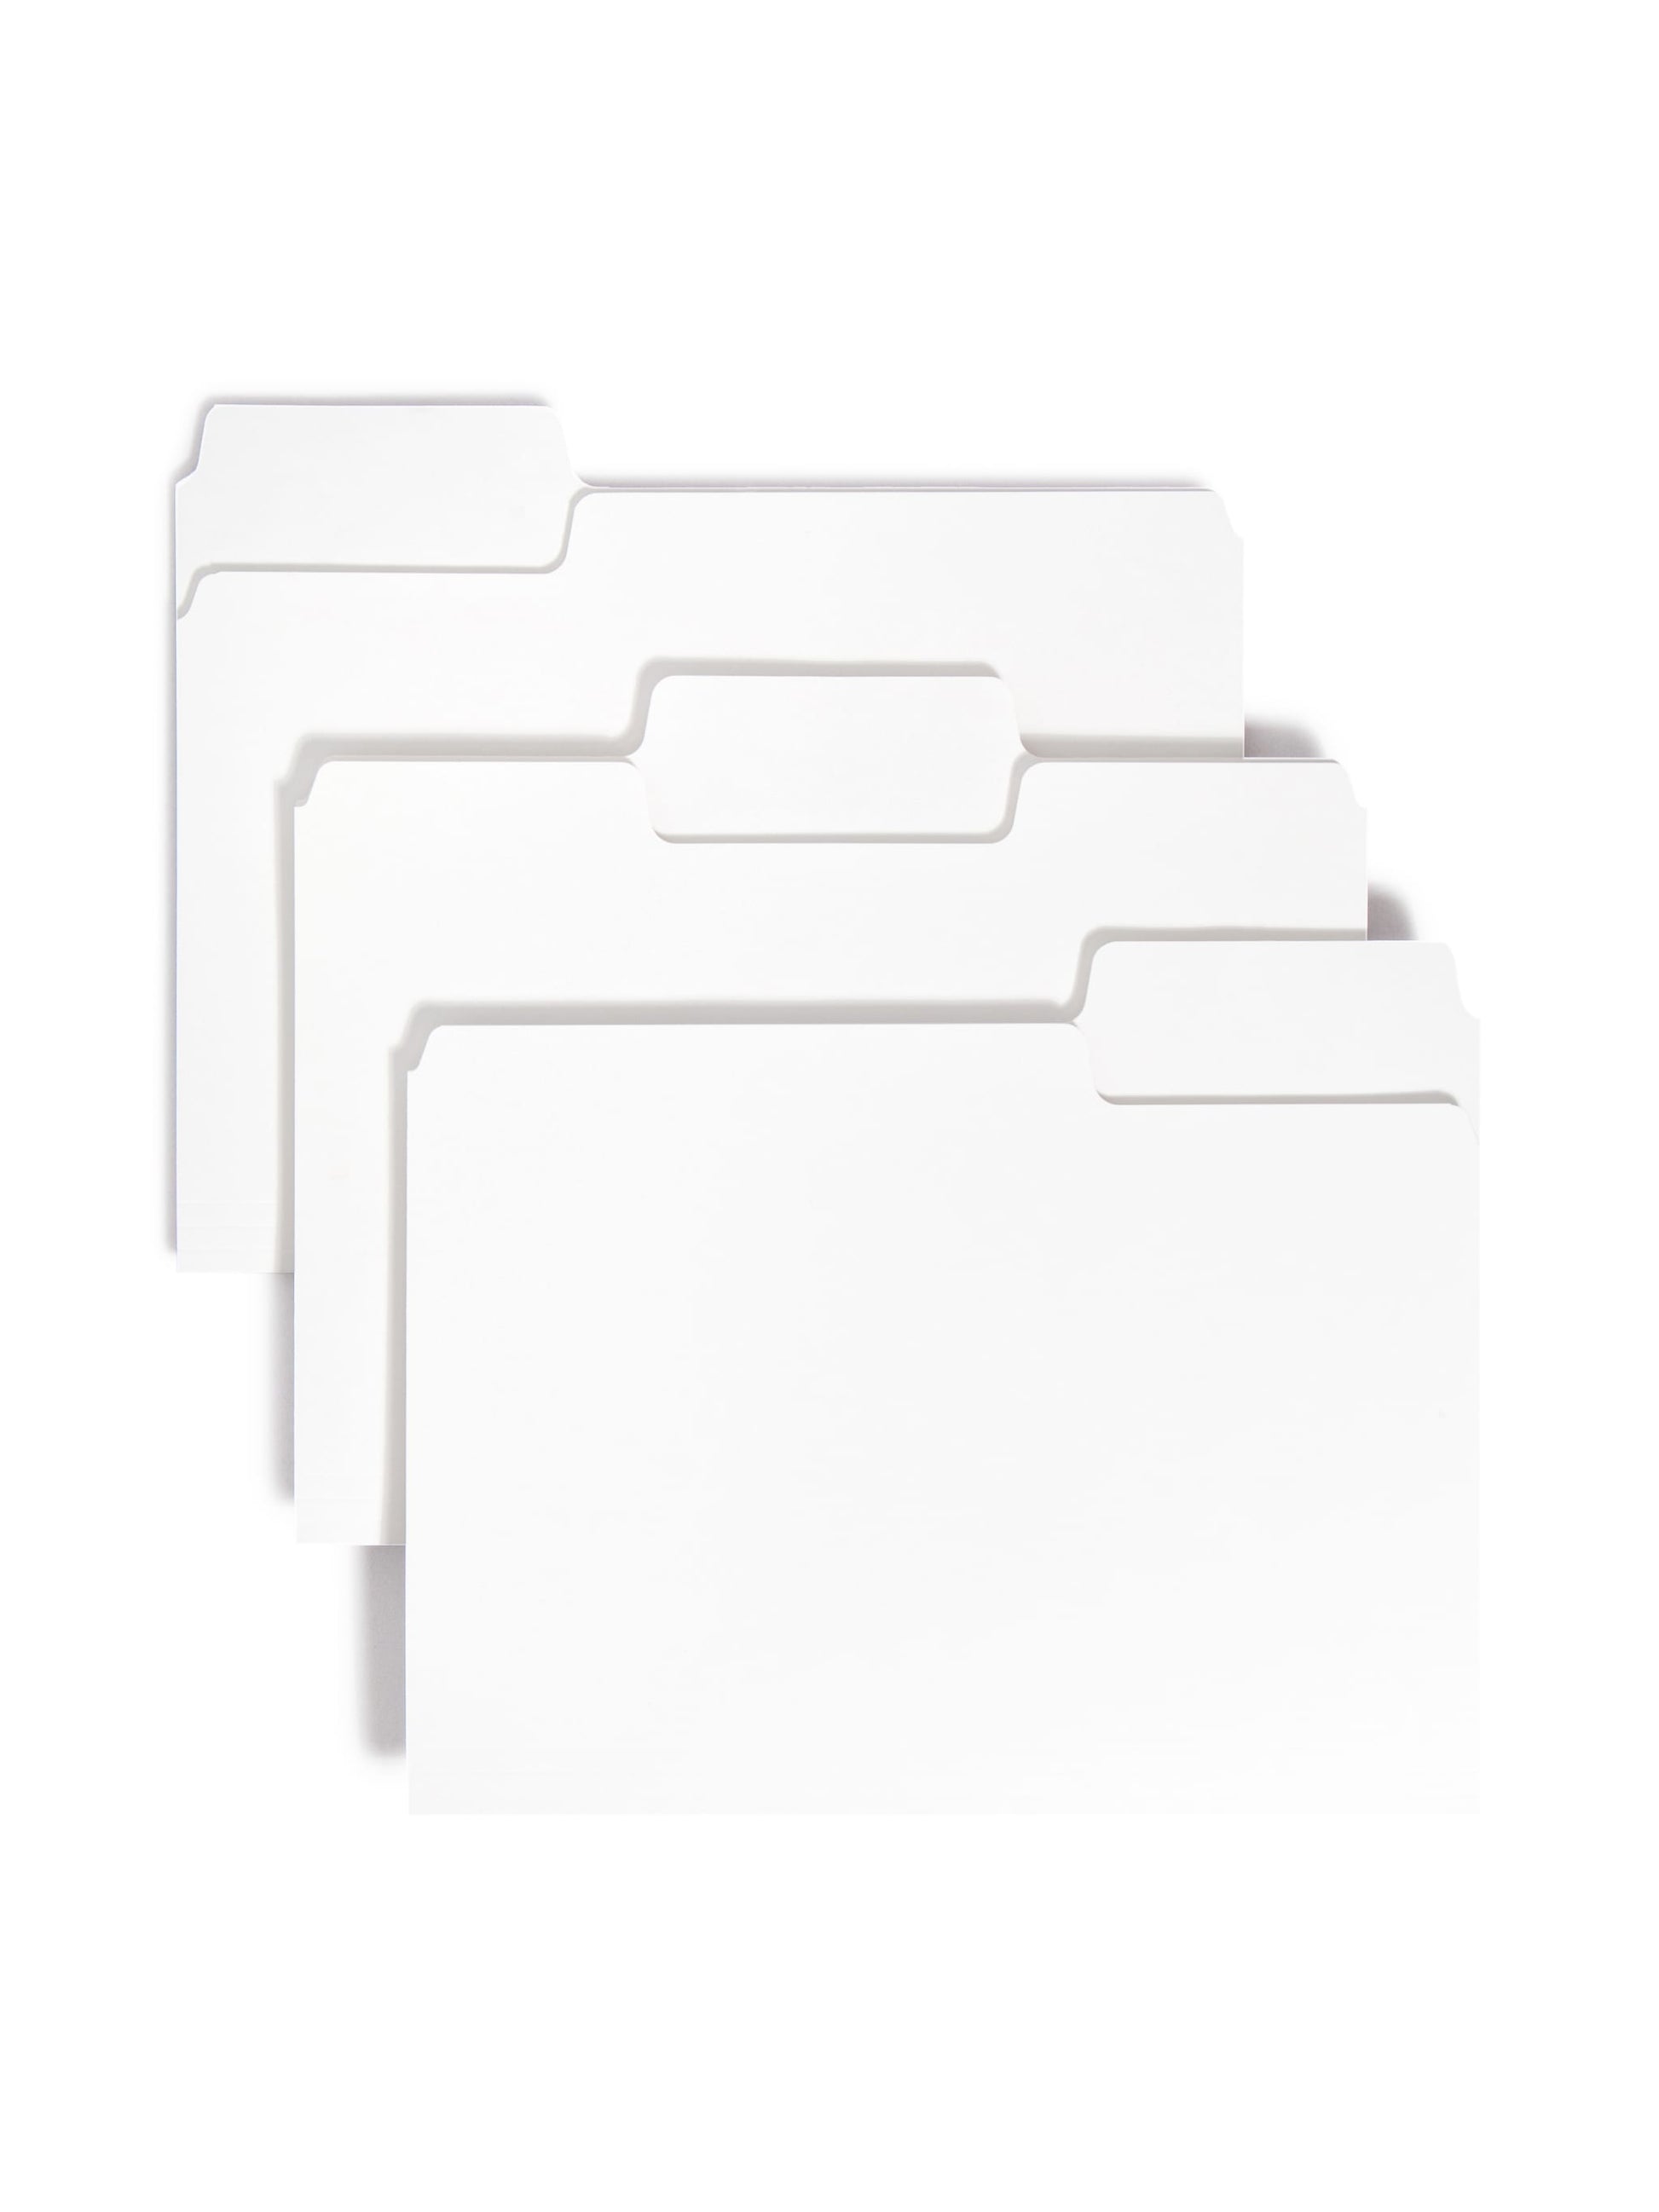 SuperTab® File Folders, 1/3-Cut Tab, White Color, Letter Size, Set of 100, 086486119801